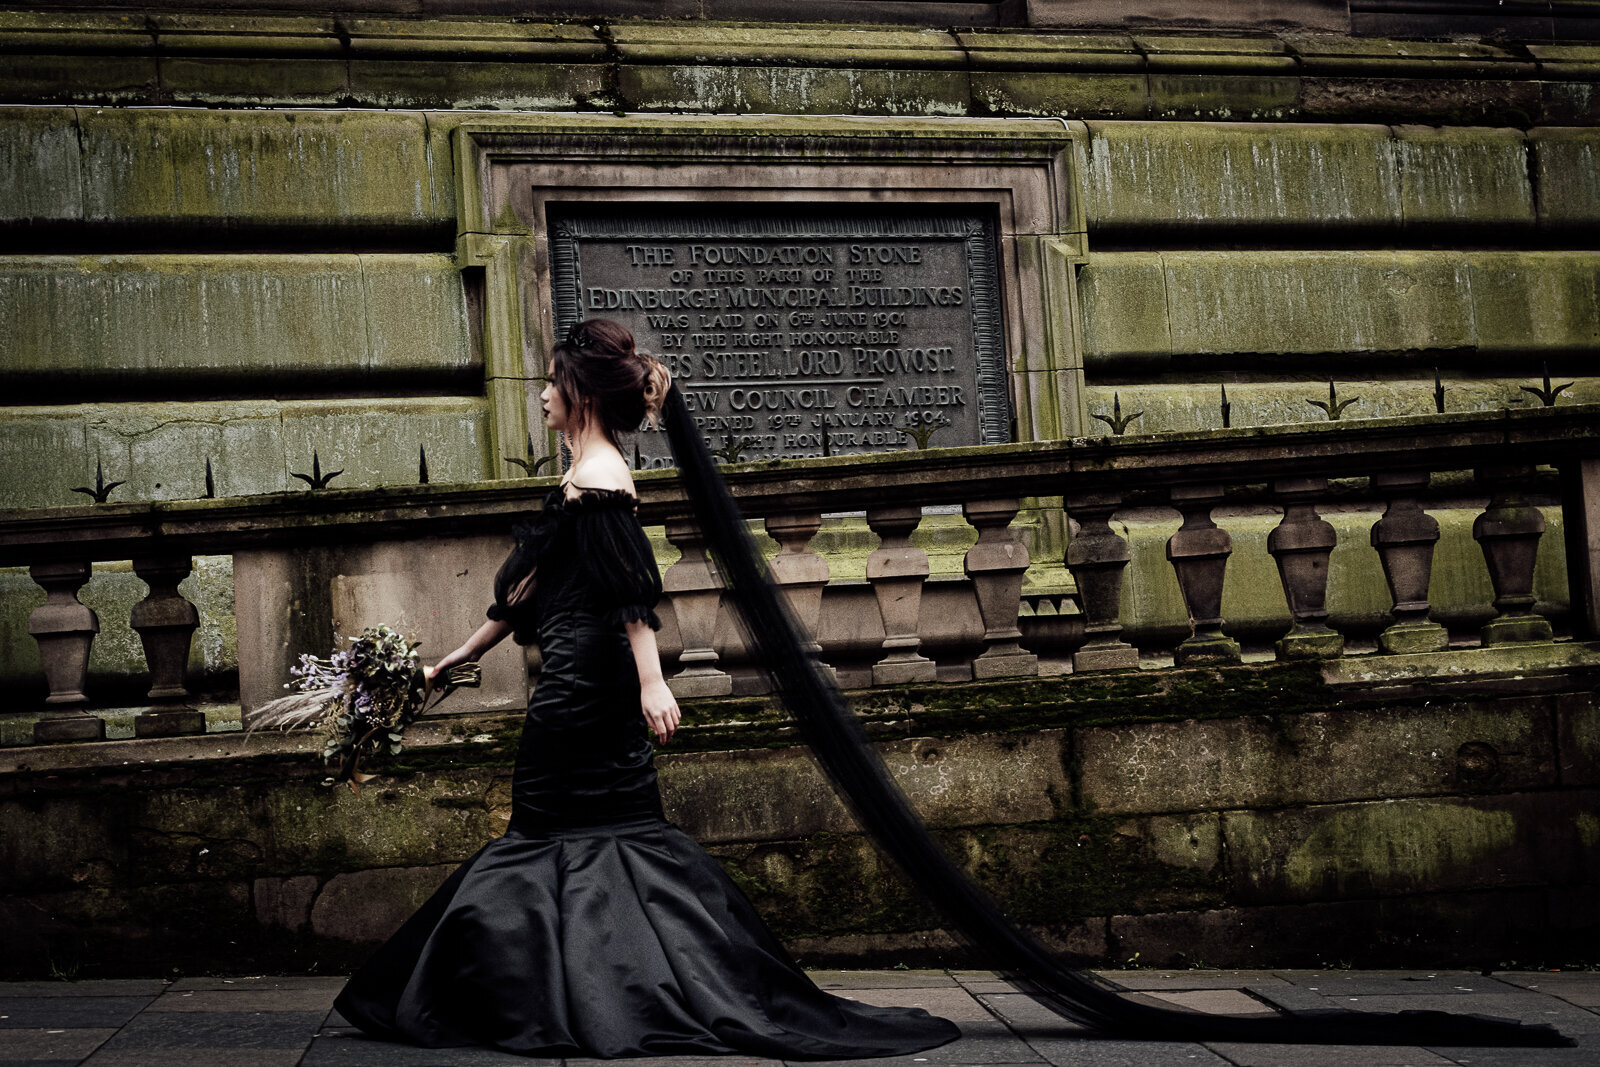 Gothic bride | Black dress